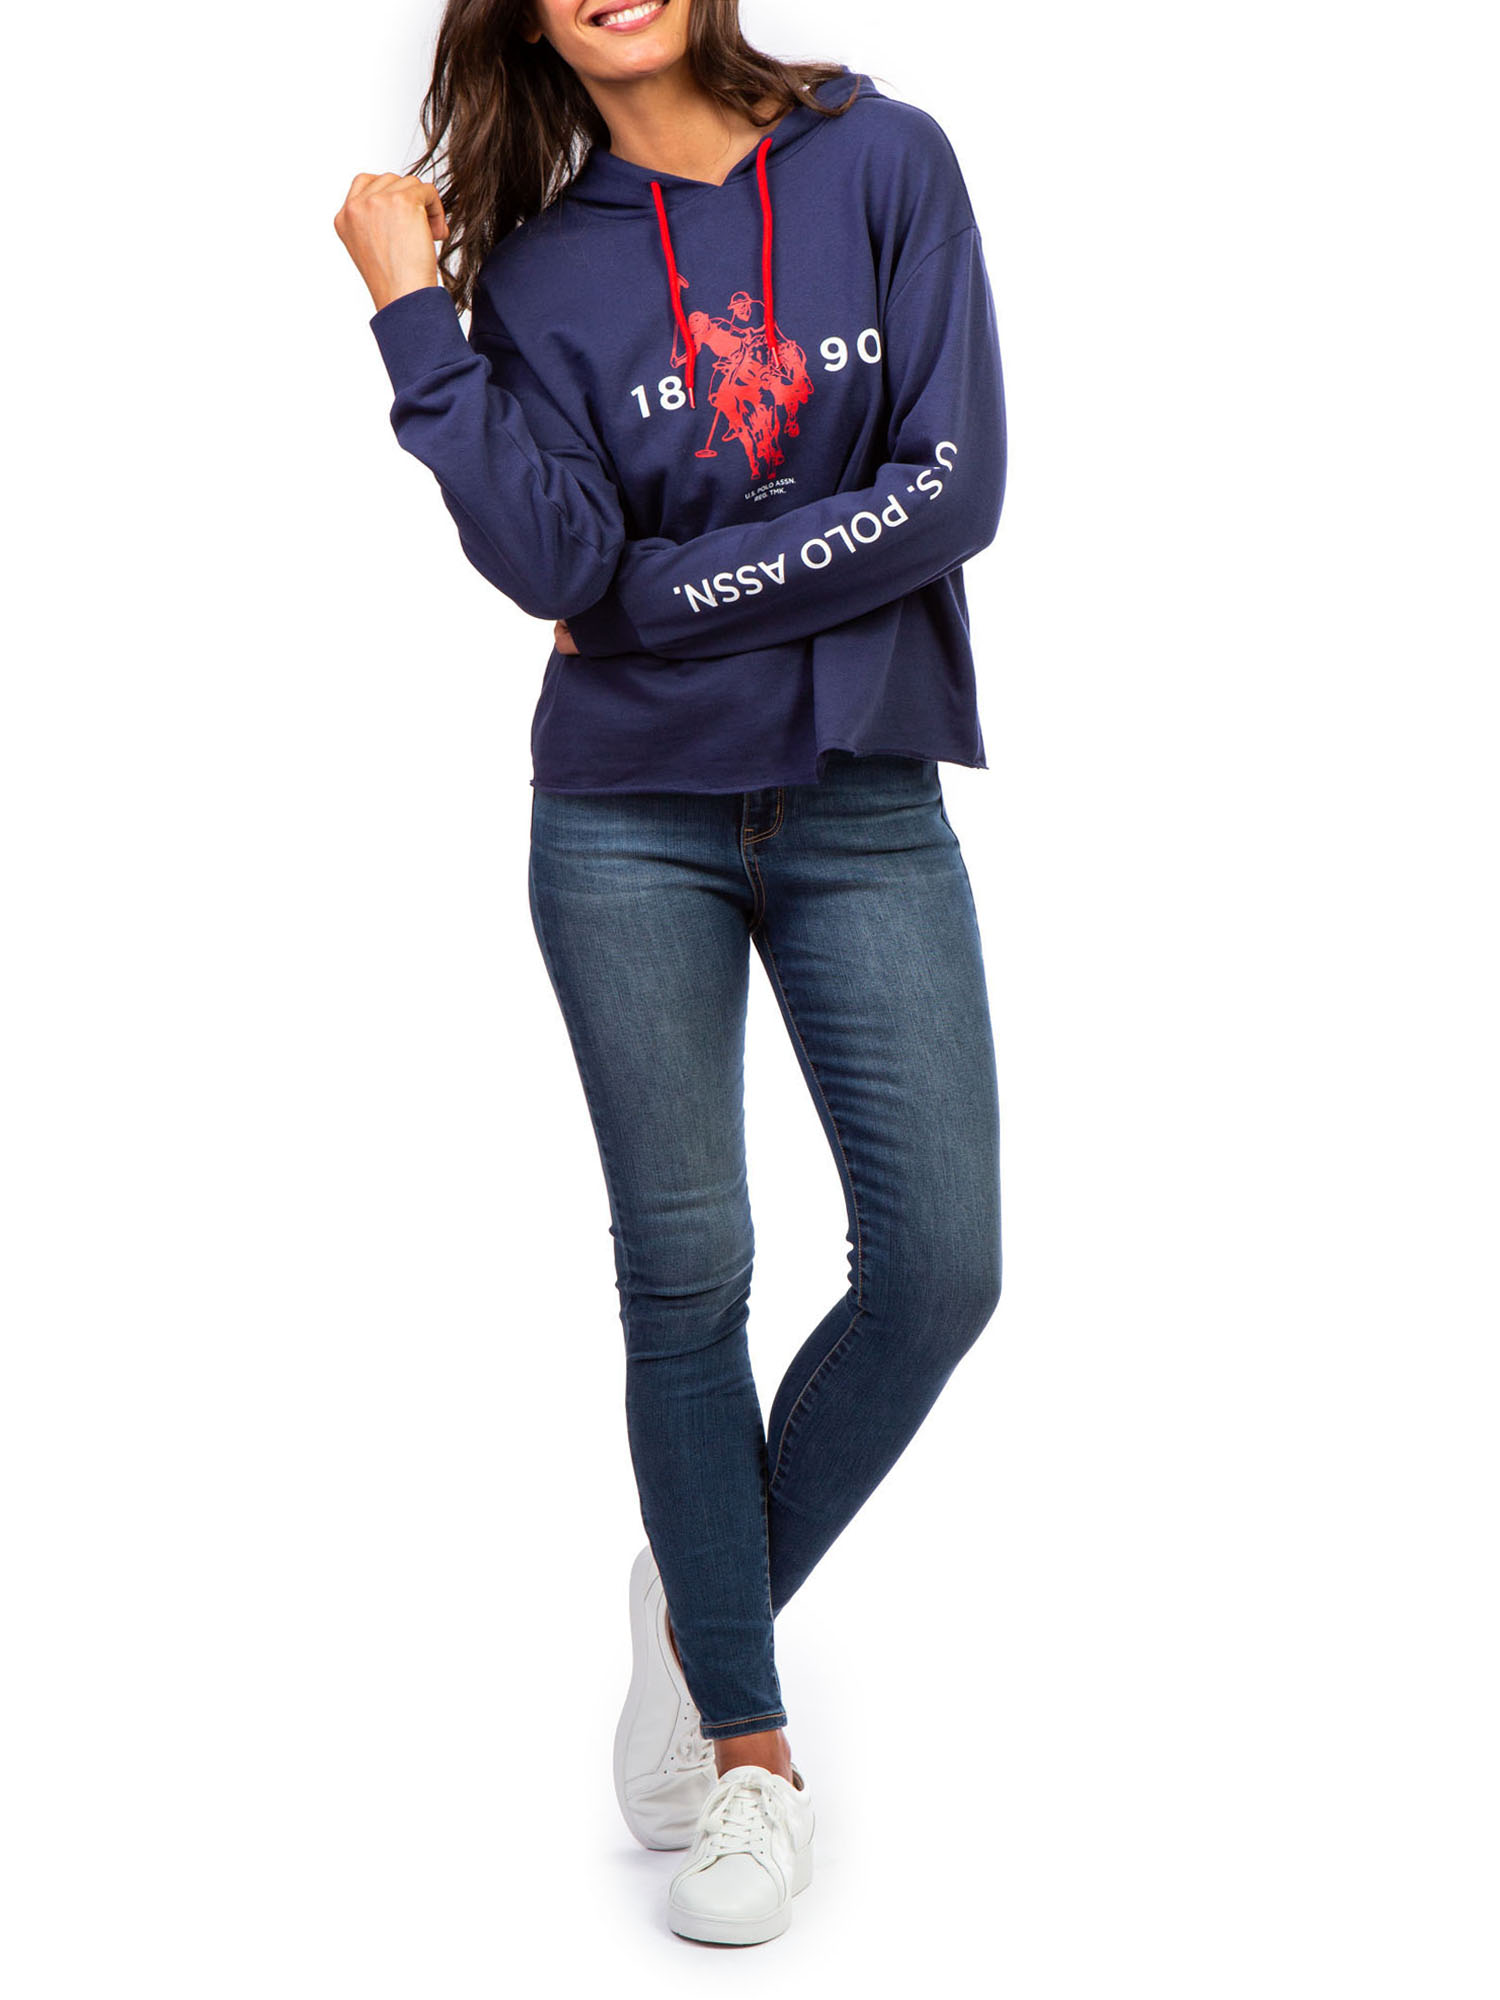 U.S. Polo Assn. Meet & Greet Logo Sweatshirt Women's - image 2 of 5